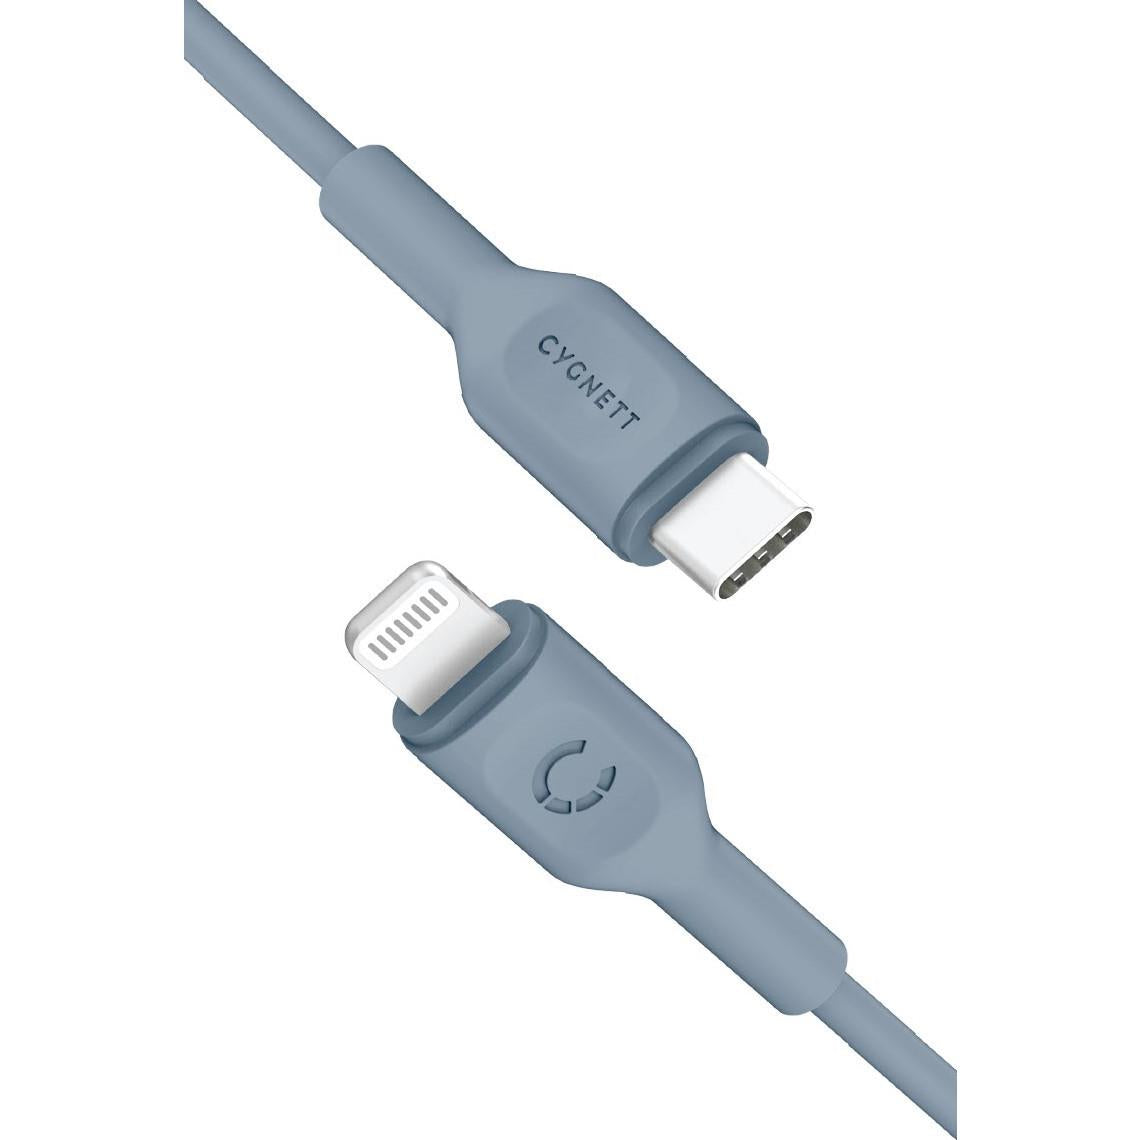 Apple USB-C to Lightning Cable (1m) - JB Hi-Fi